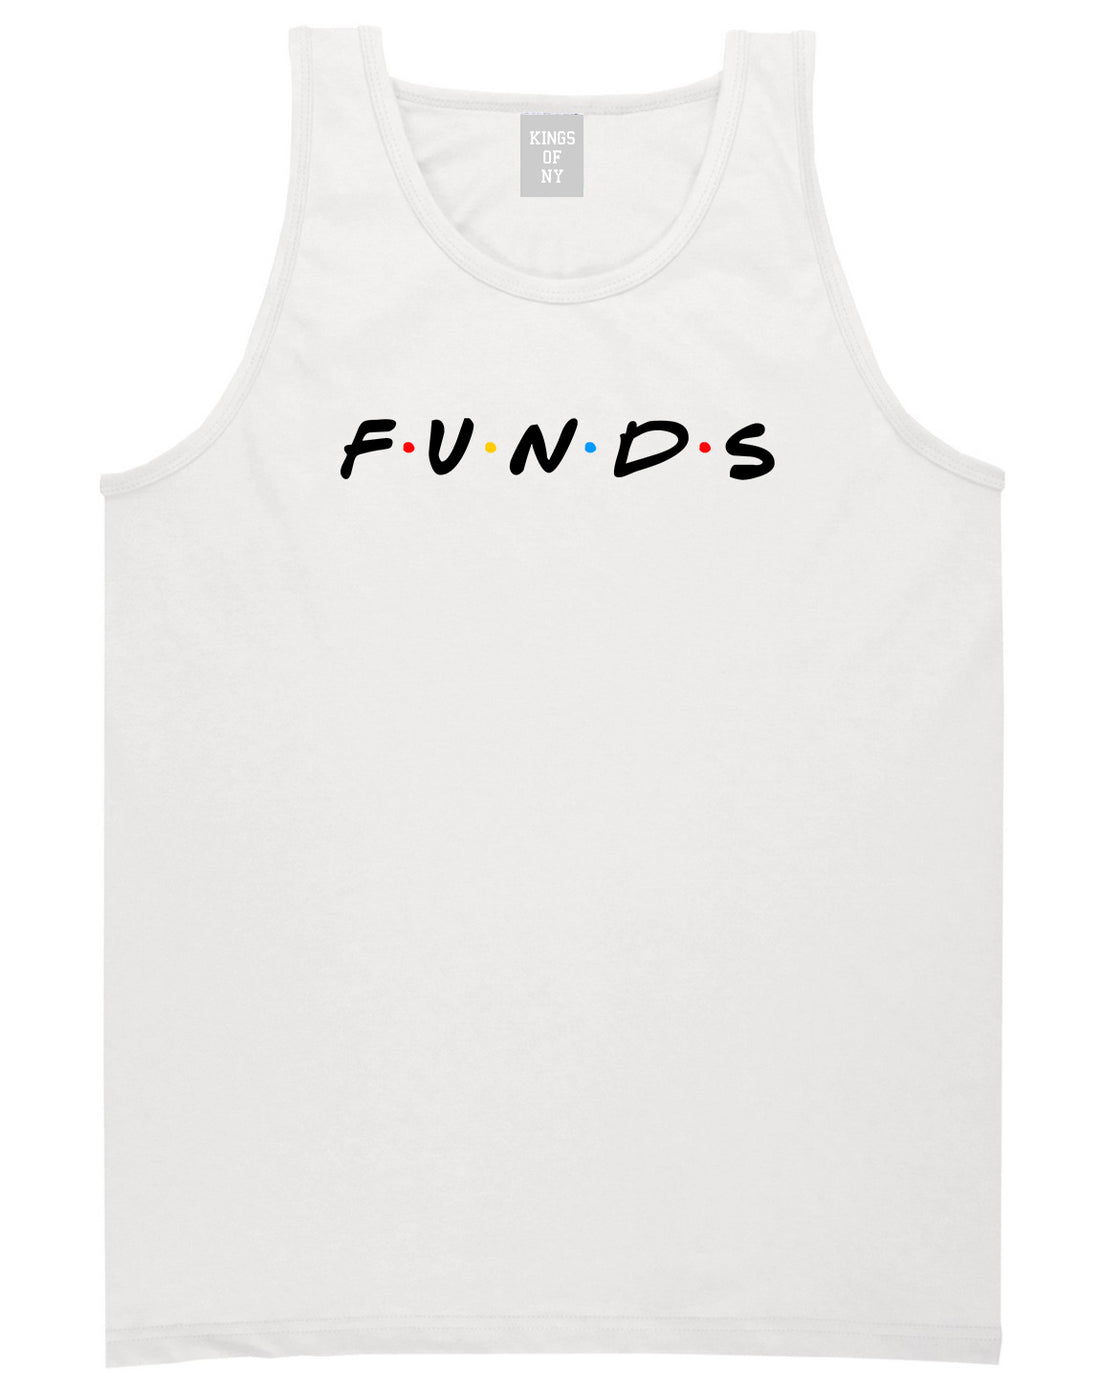 Funds Friends Mens Tank Top Shirt White